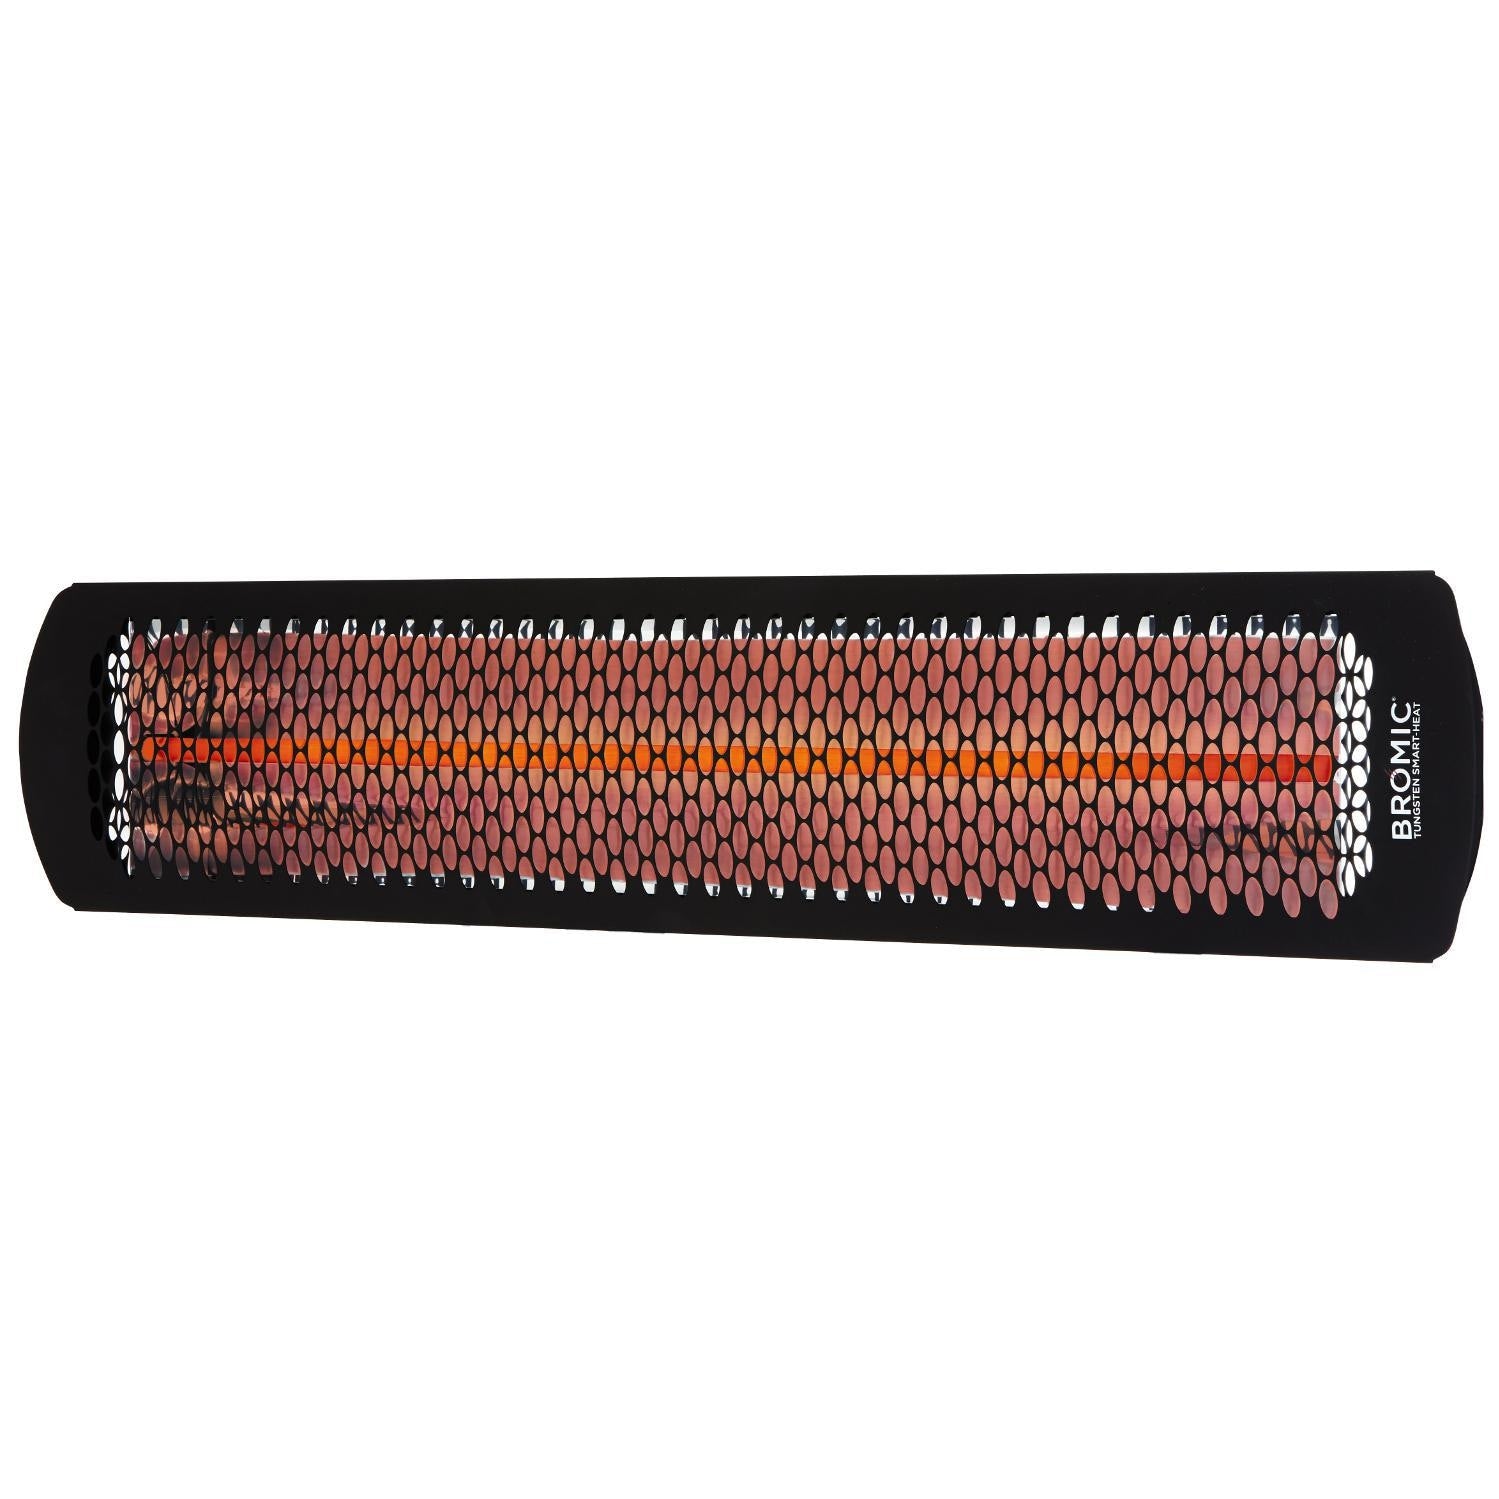 Bromic Heating - Tungsten Smart-Heat 56-Inch 6000W Dual Element 240V Electric Infrared Patio Heater - Black